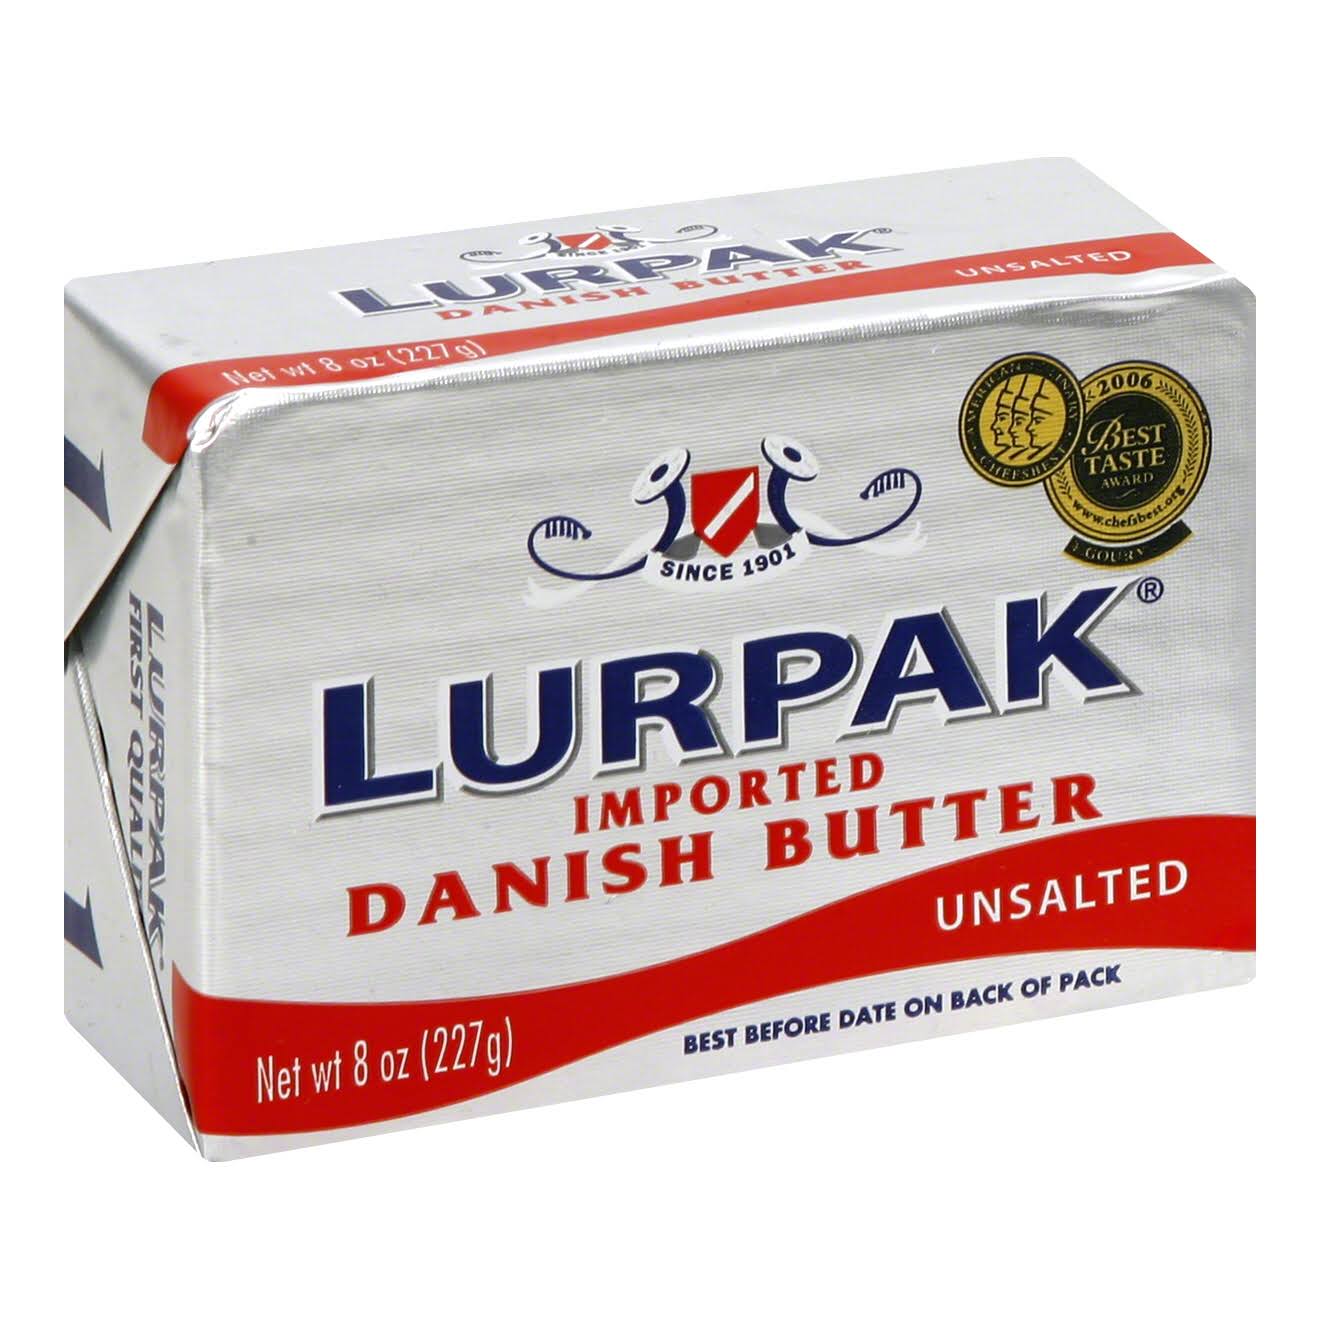 Lurpak Danish Butter - Unsalted